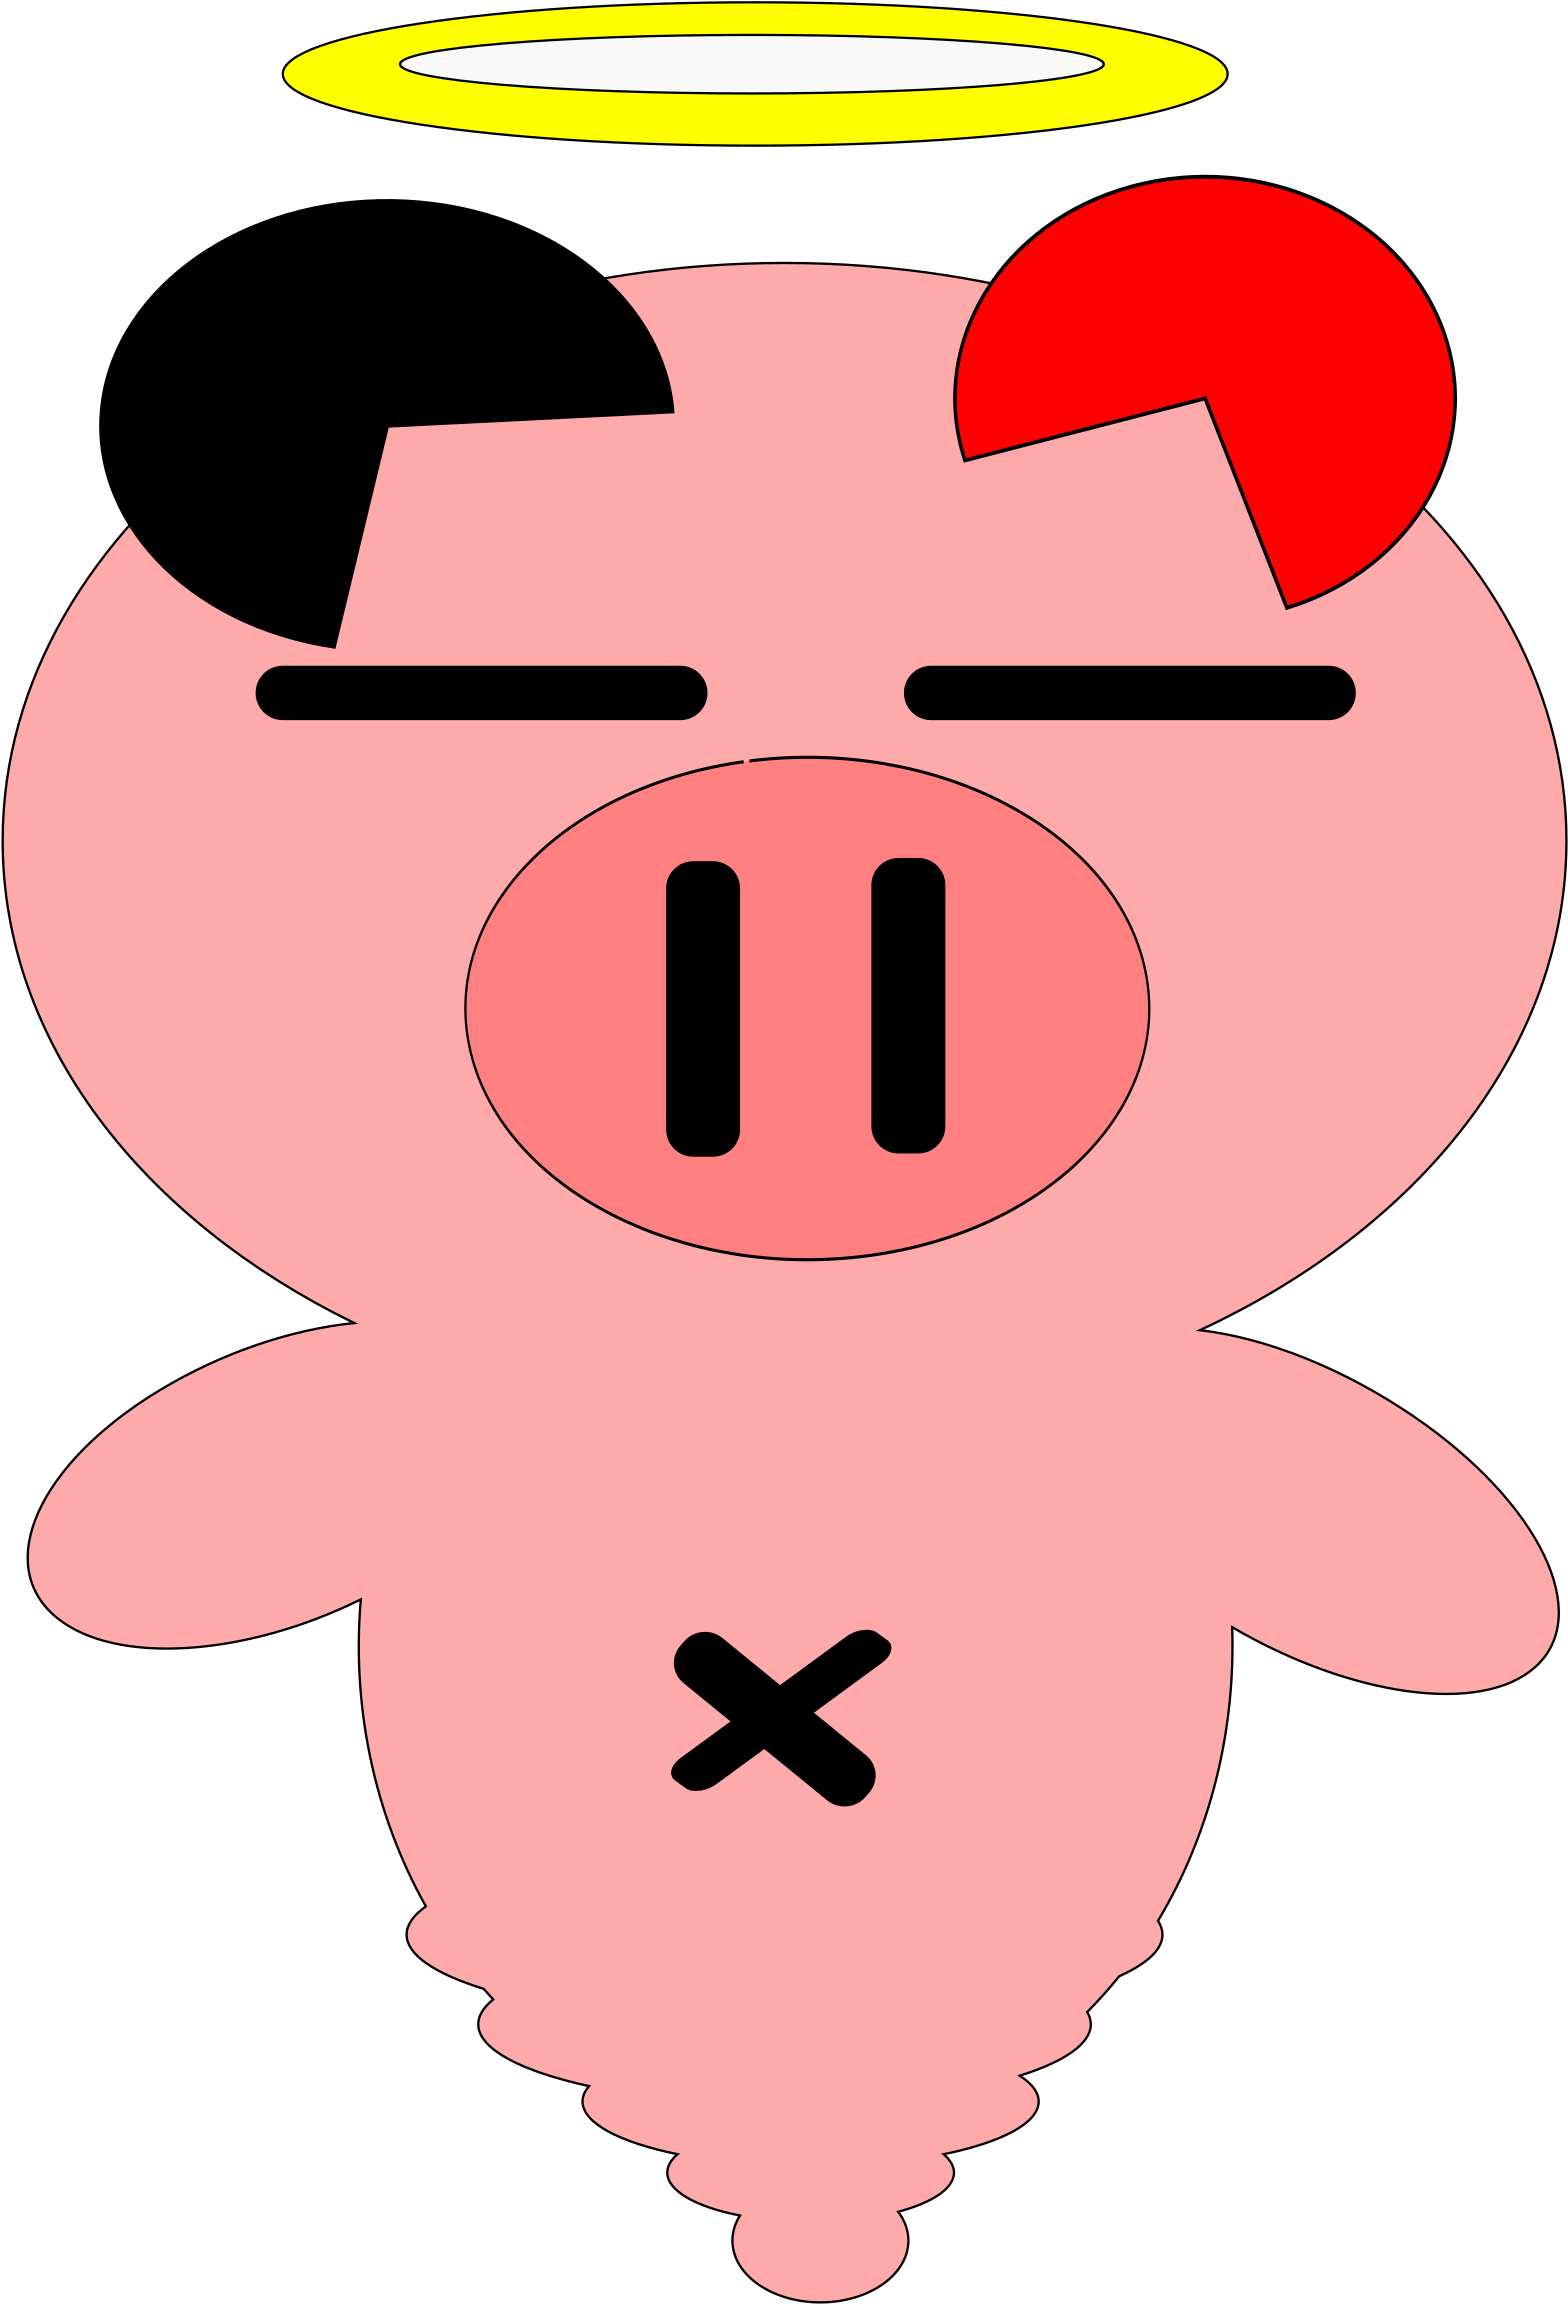 Ghost Pig - Piggy Ghost (1697x2400)